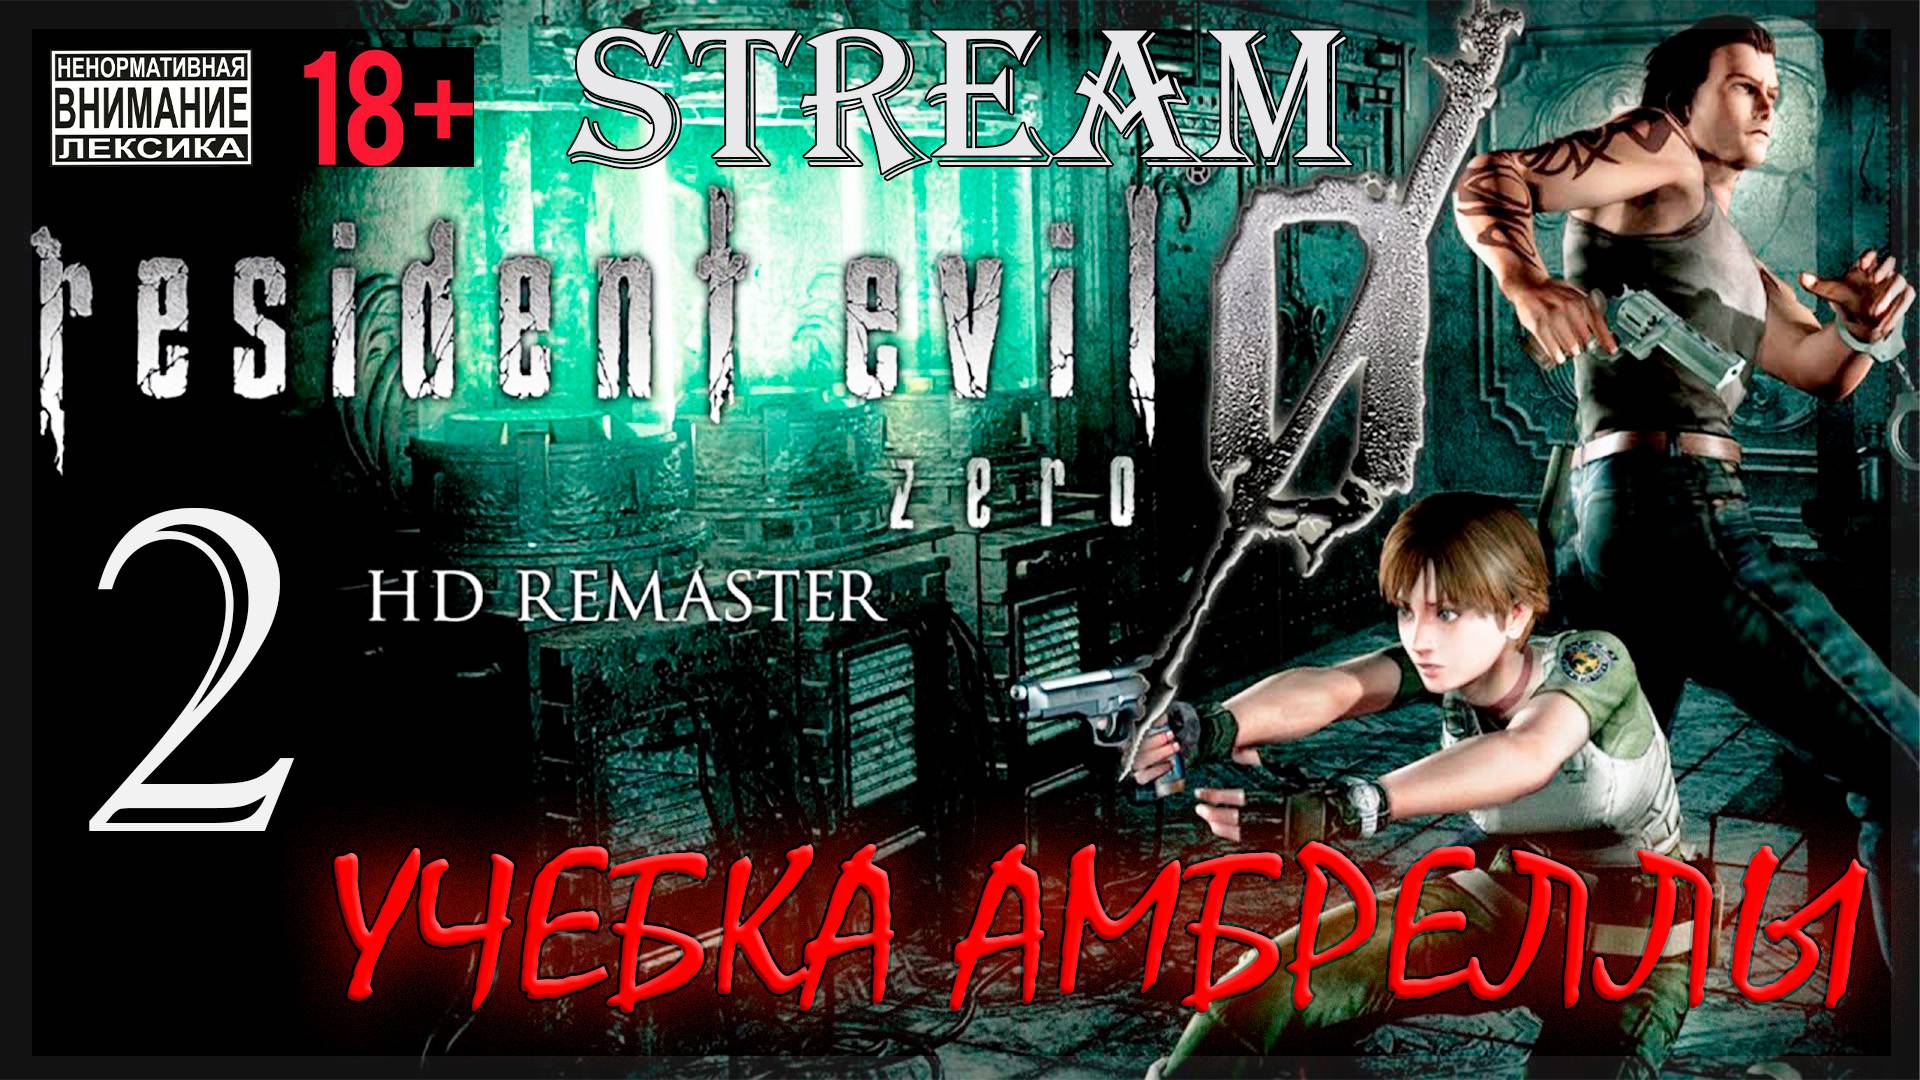 Stream - Resident Evil Zero HD REMASTER #2 Учебка Амбреллы